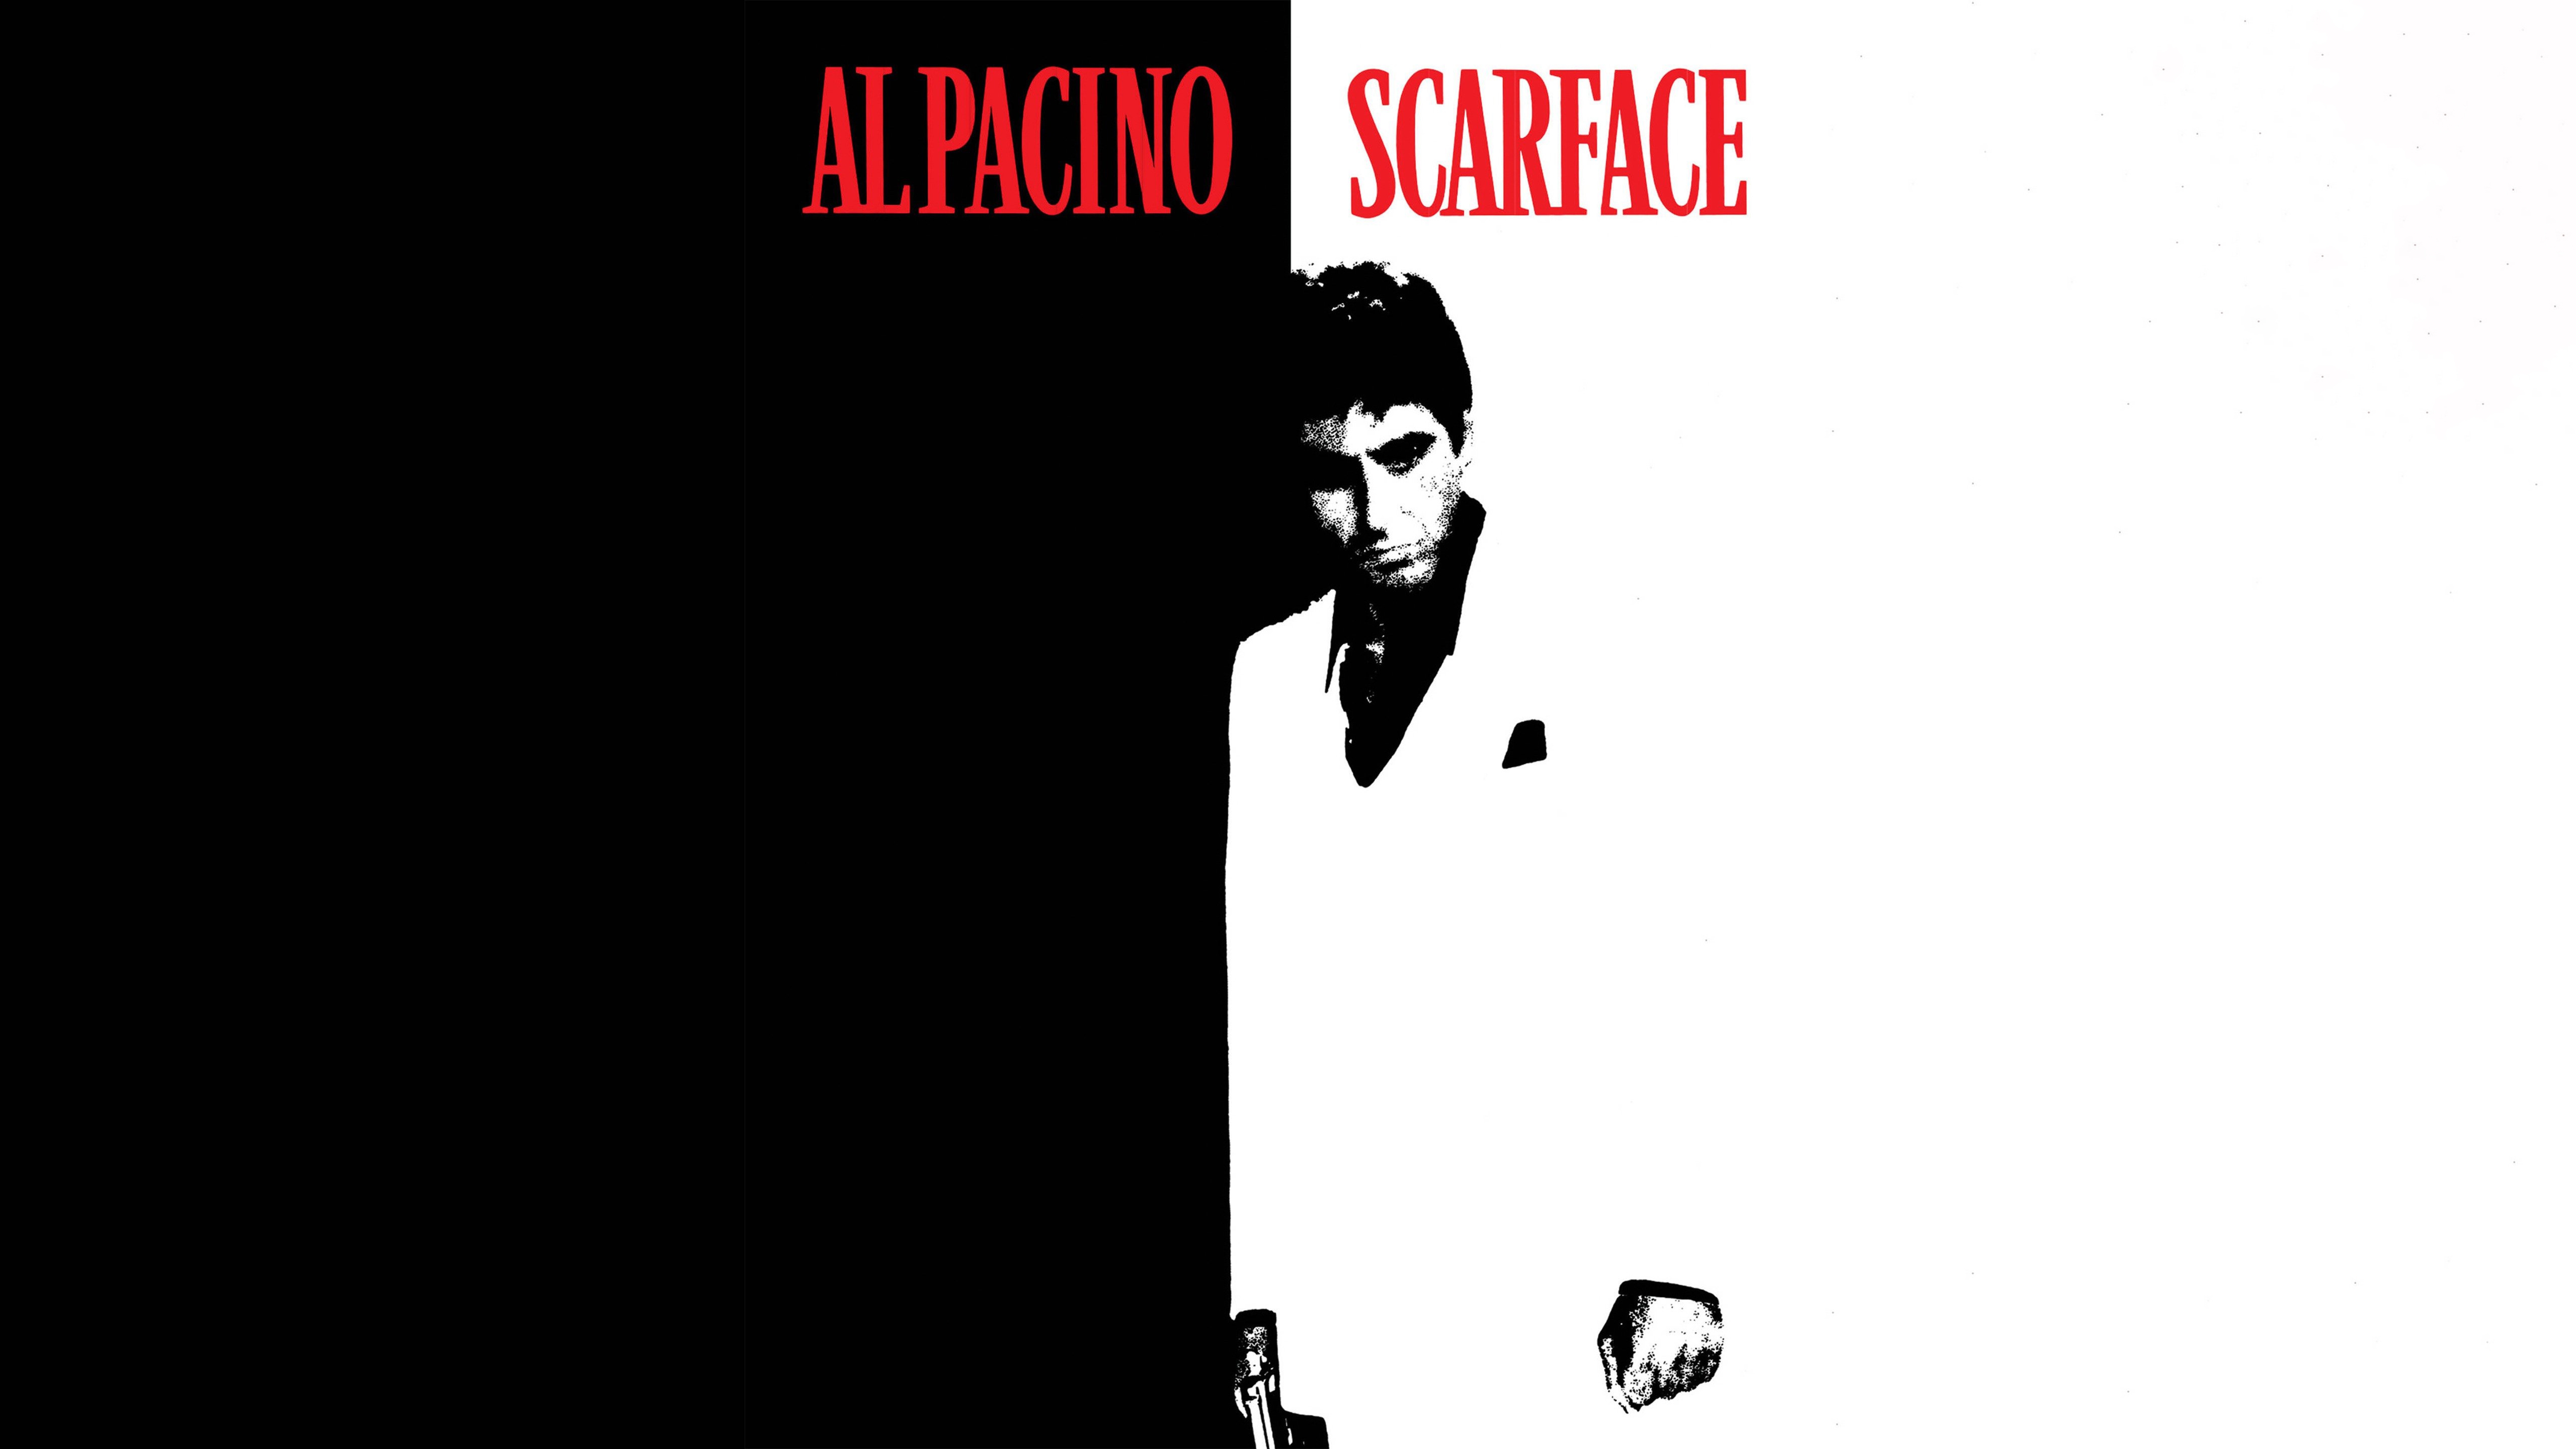 HD wallpaper, Scarface, 5K, Al Pacino